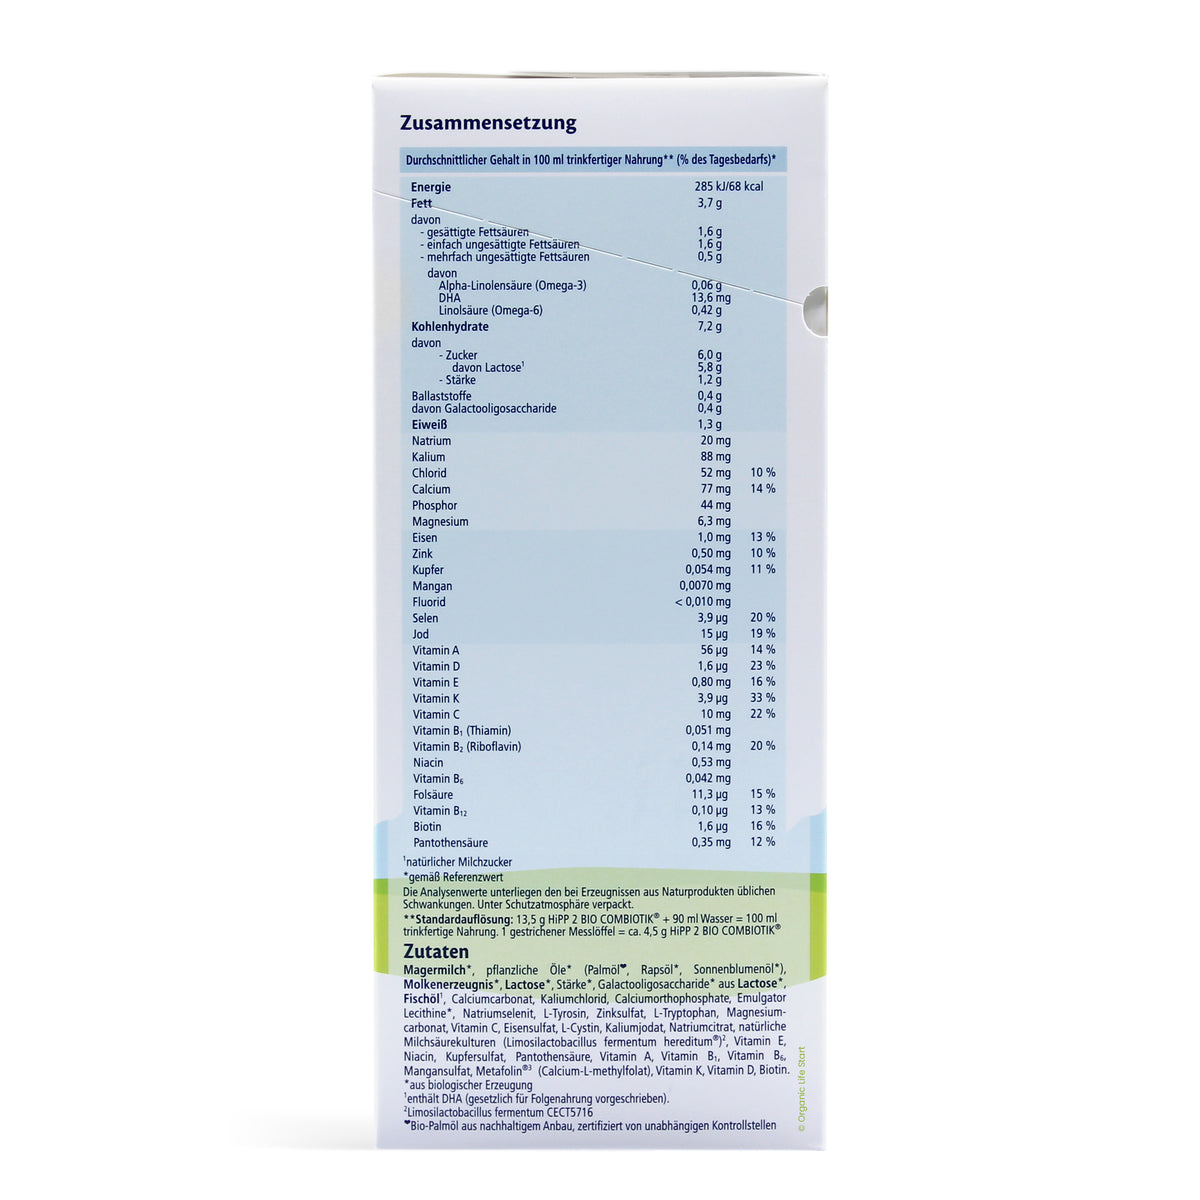 HiPP German Stage 2 Ingredients Nutritional Information